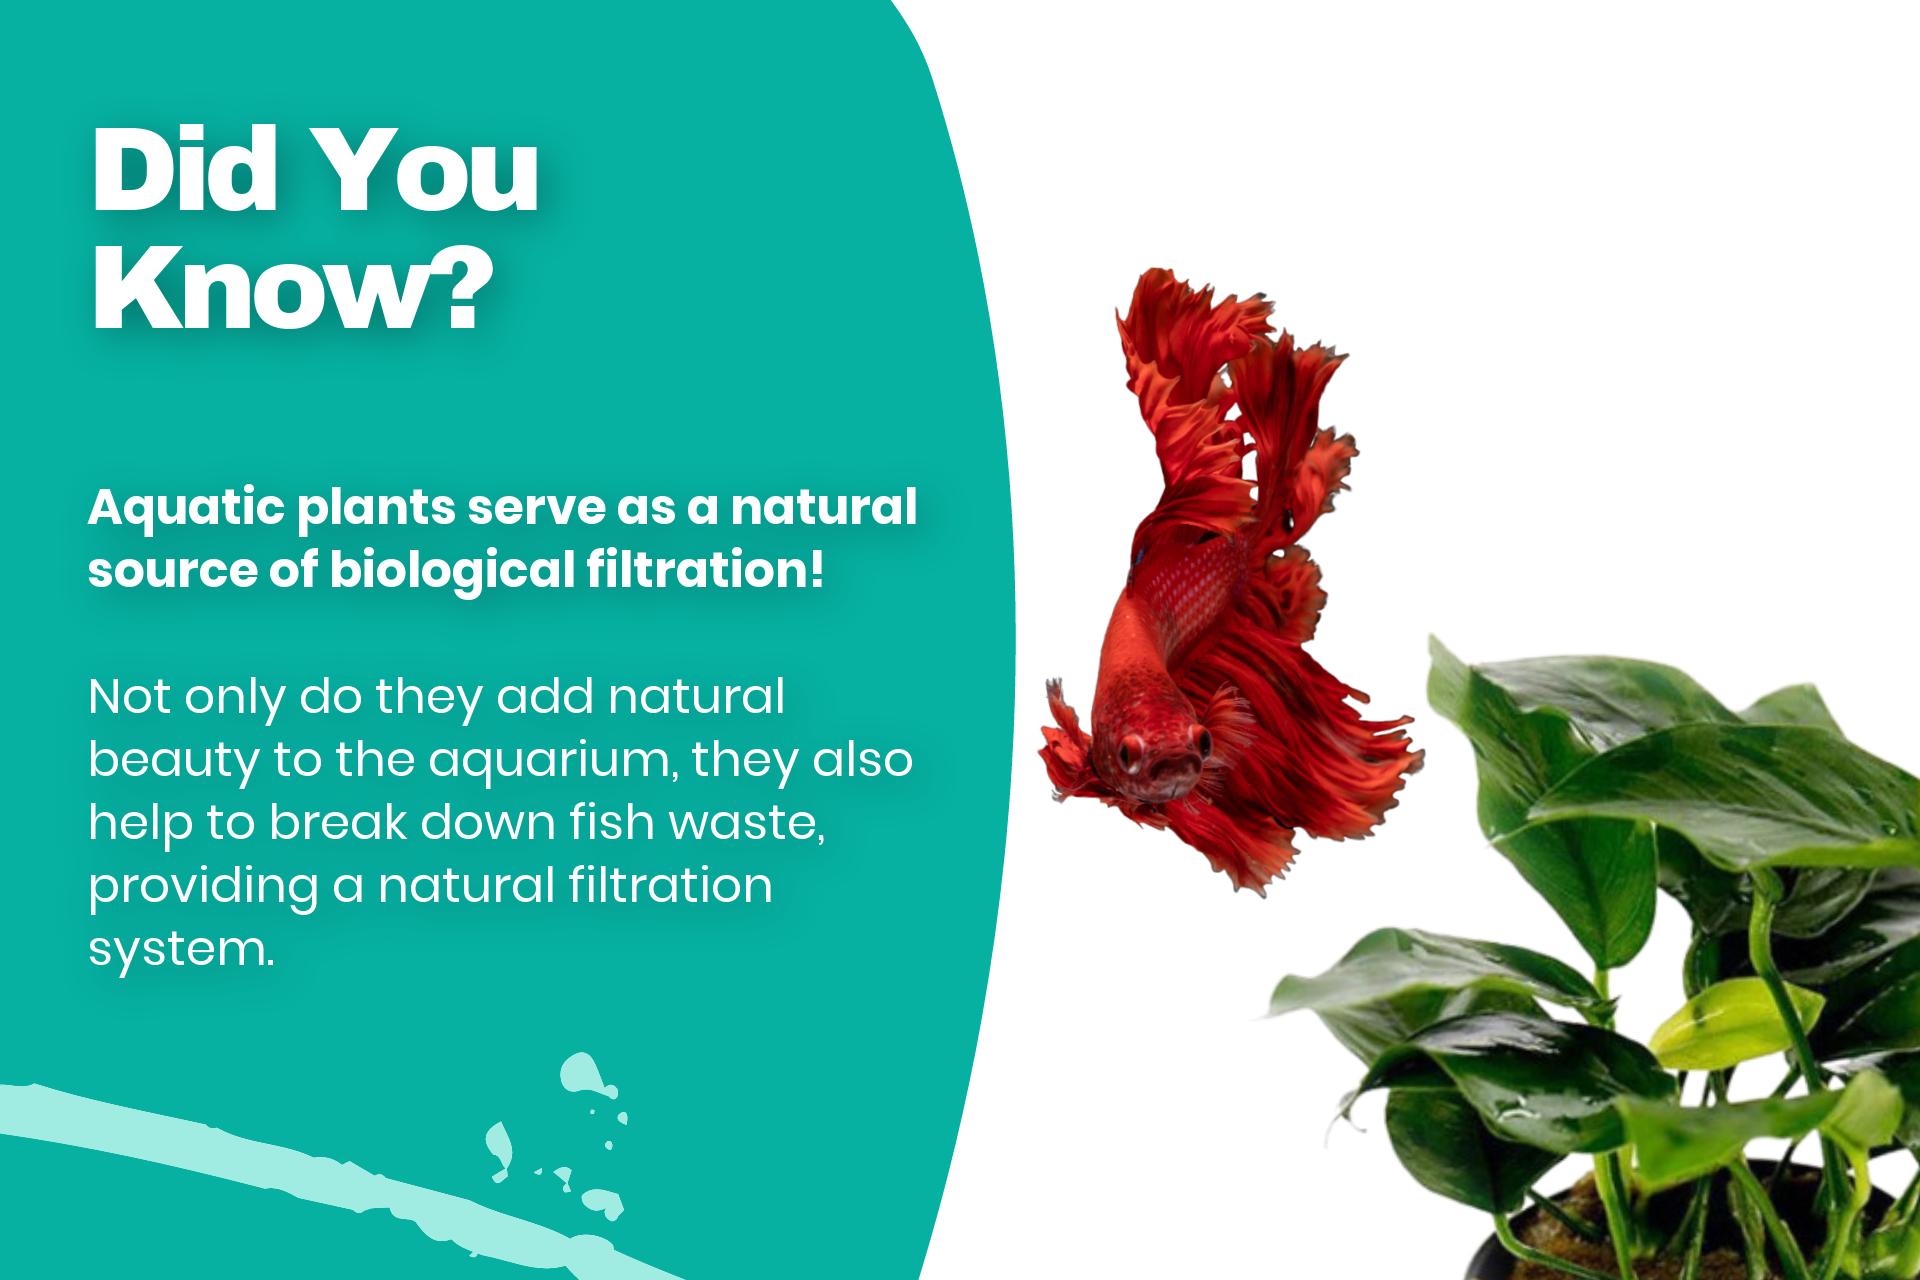 Aquatic plants serve as a natural source of biological filtration